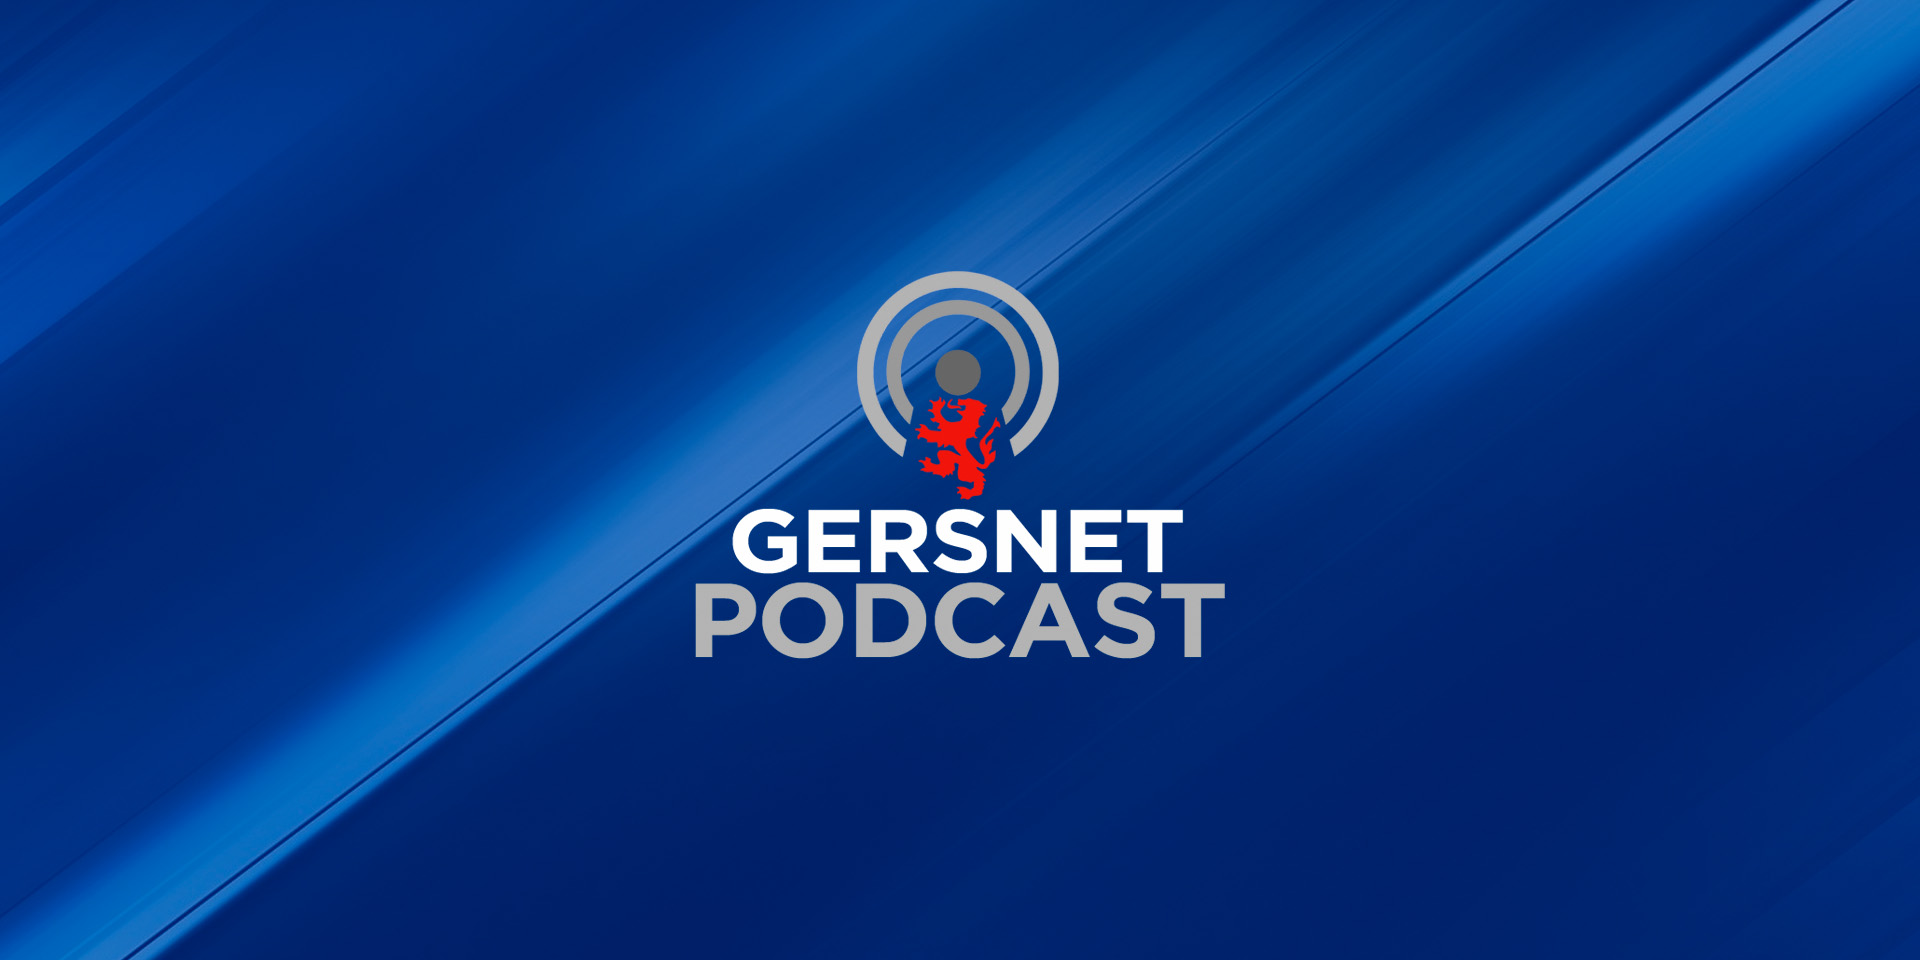 Gersnet Podcast 273 - A new season begins!